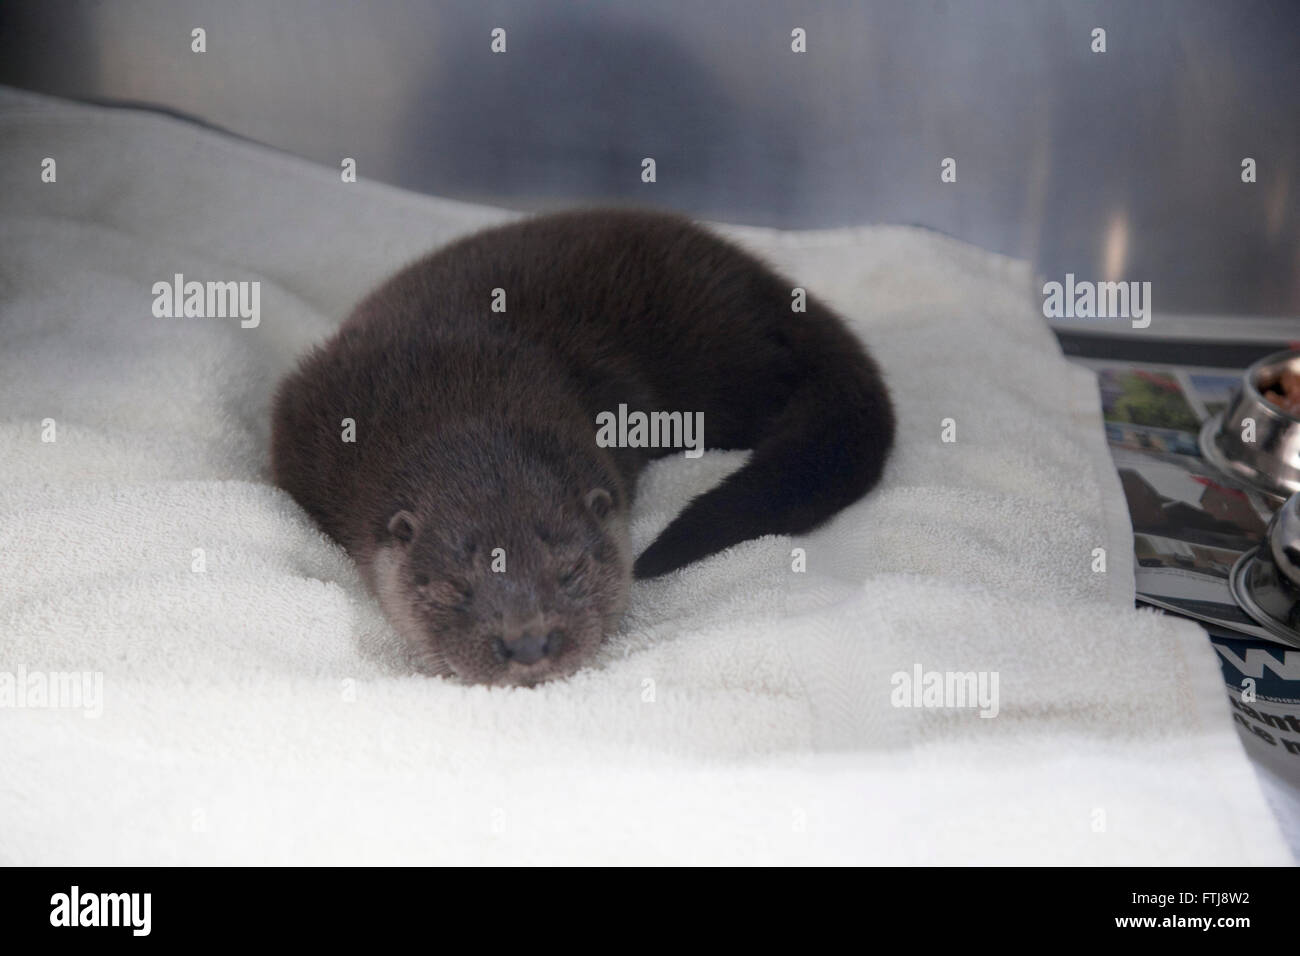 Juvenile European Otter sleeping in cage at wildlife hospital Stock Photo